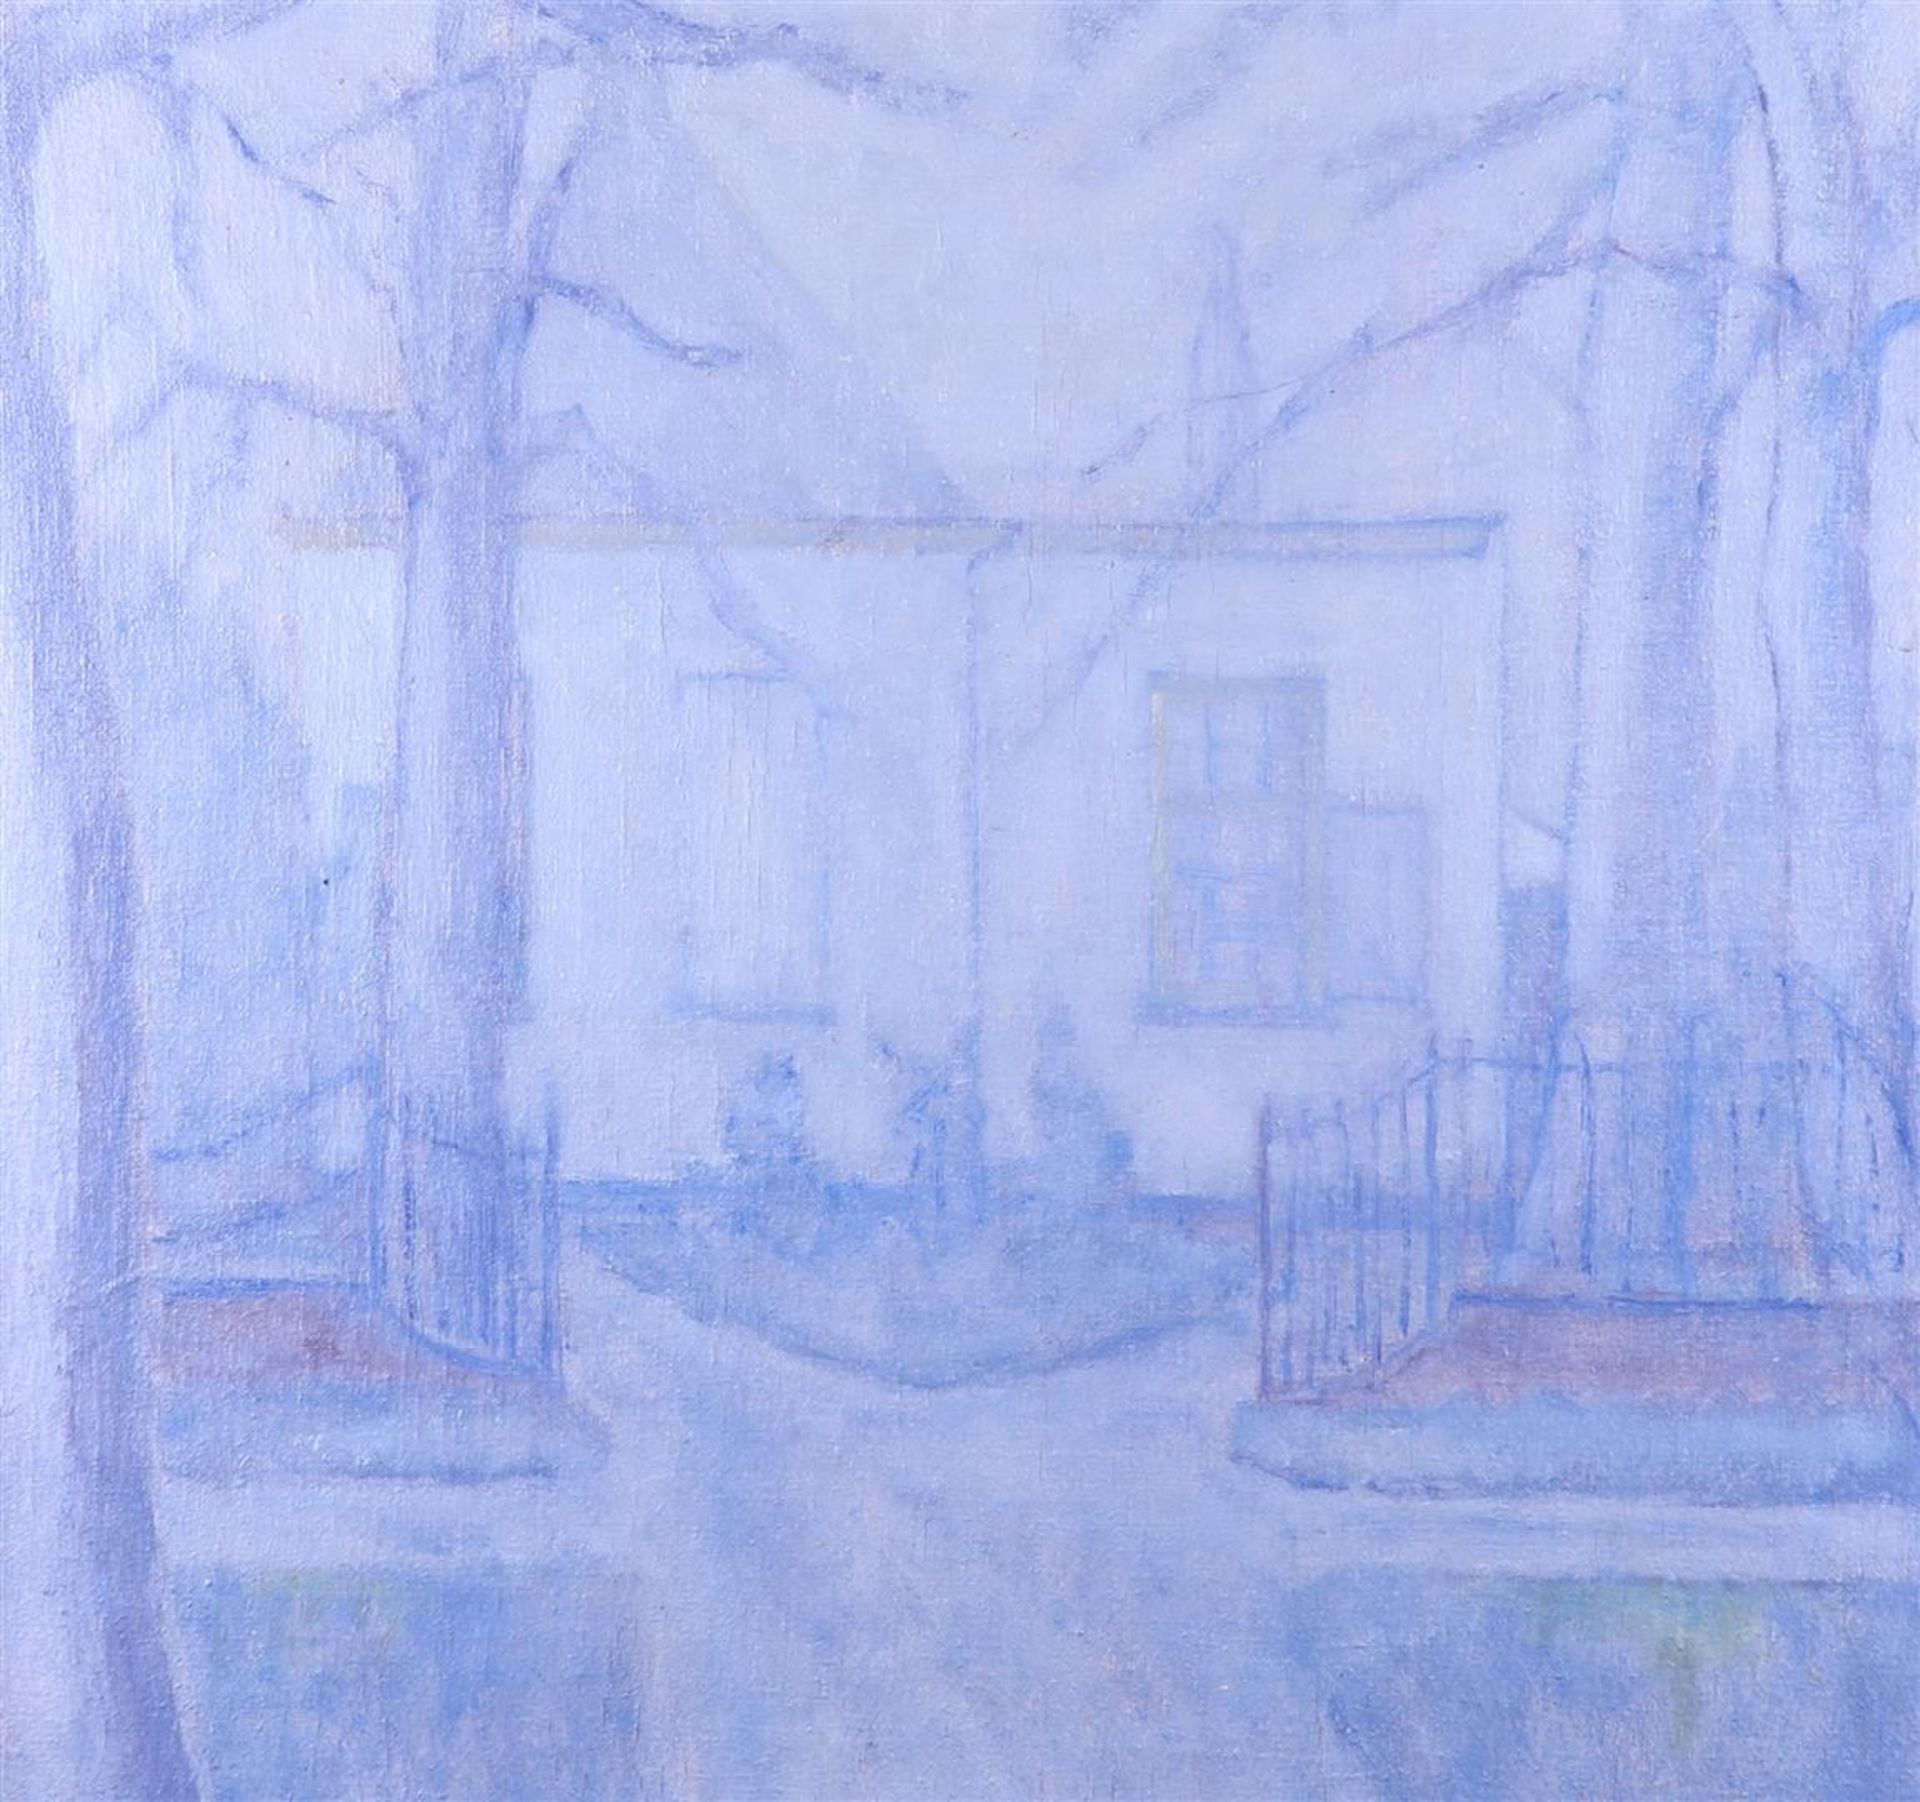 "Floris"Johannes de Groot (The Hague 1890 - 1951 Amsterdam), House between trees